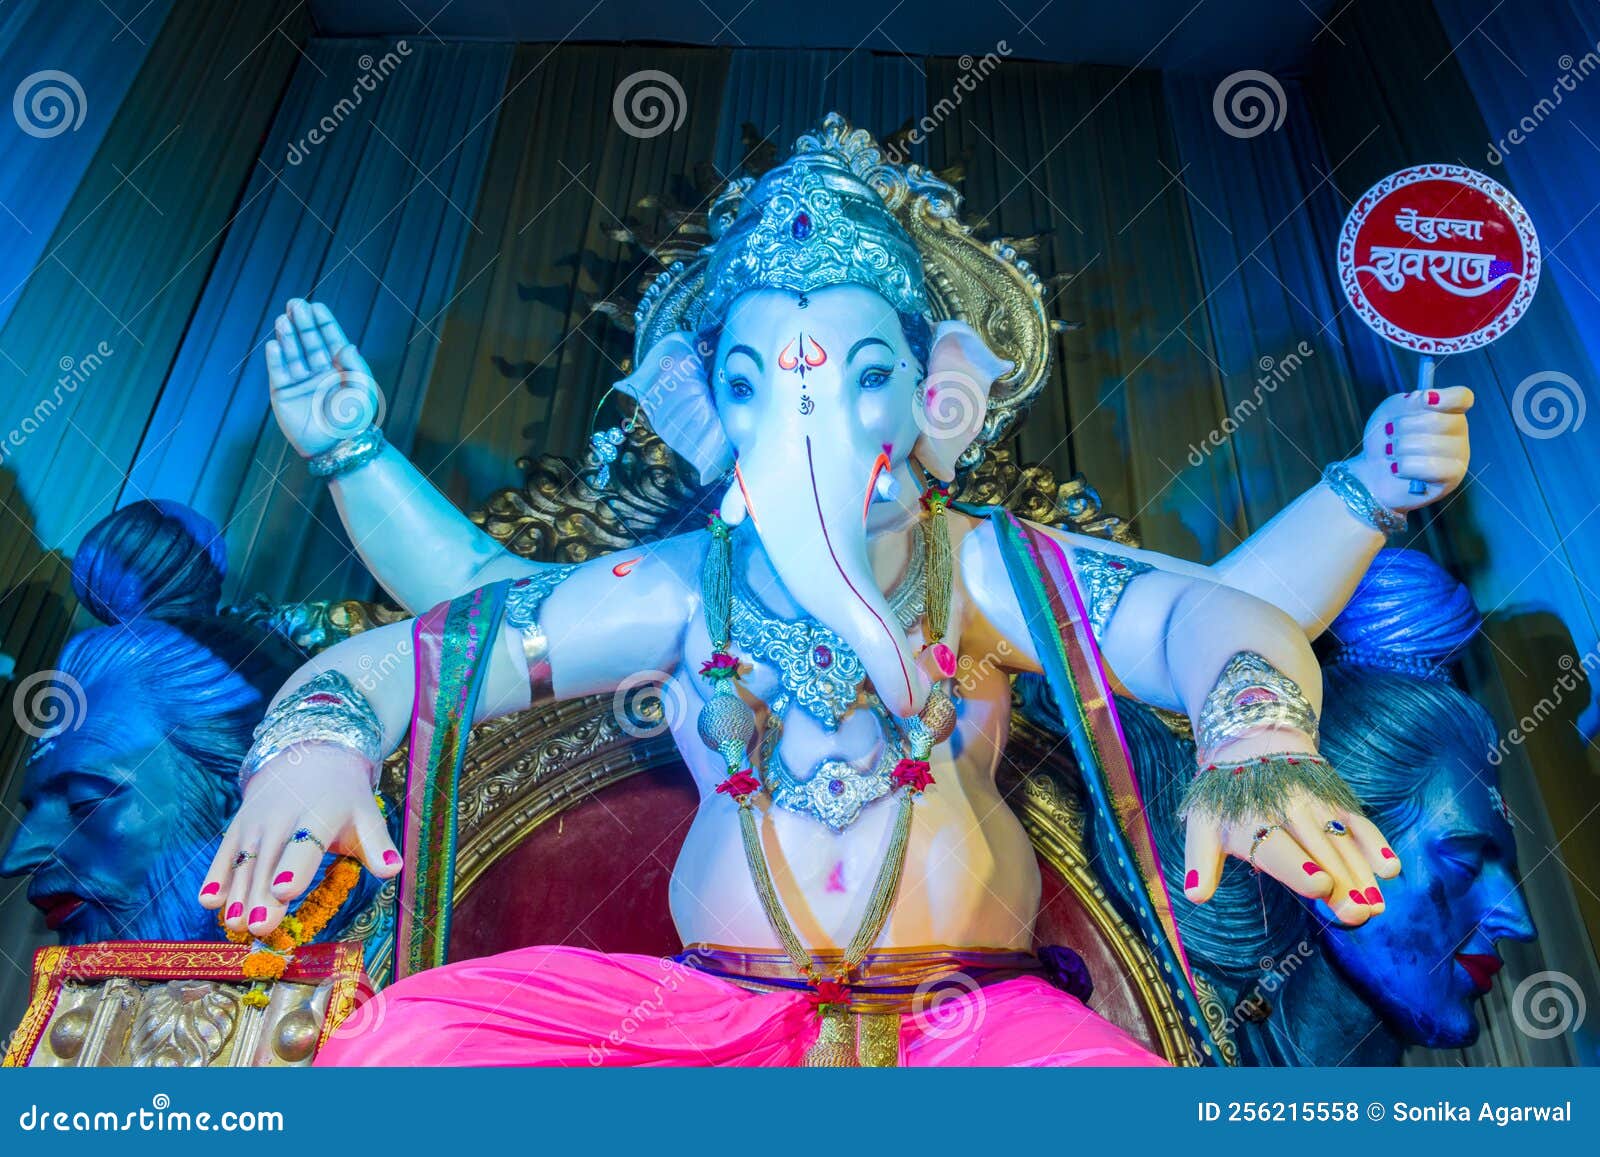 A Beautiful Idol of Lord Ganesha Stock Photo - Image of ganeshotsav ...